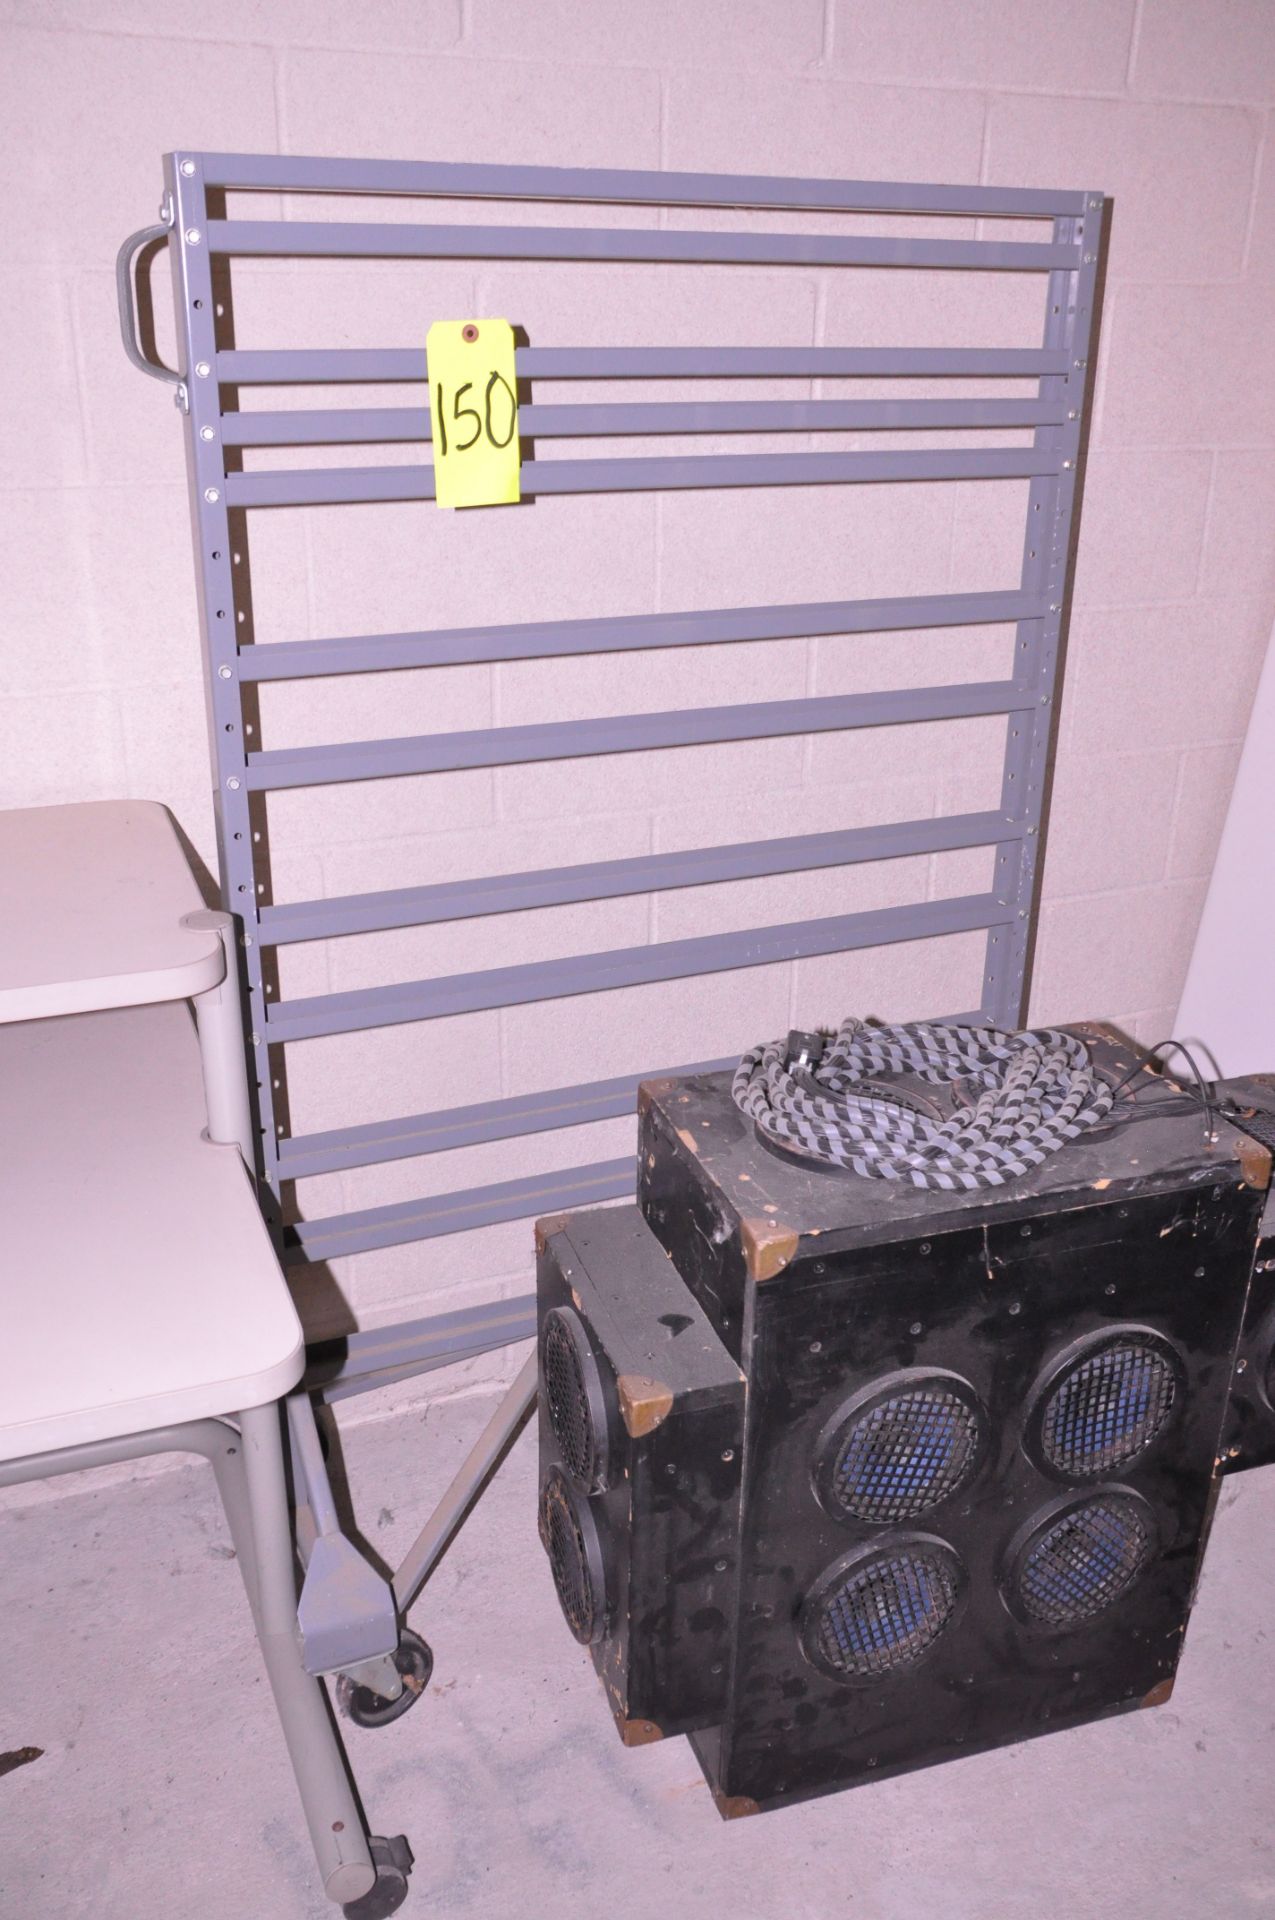 Lot-(2) Portable Bin Racks with Bins (on (1) Rack), (Located on Mezzanine) - Image 2 of 2